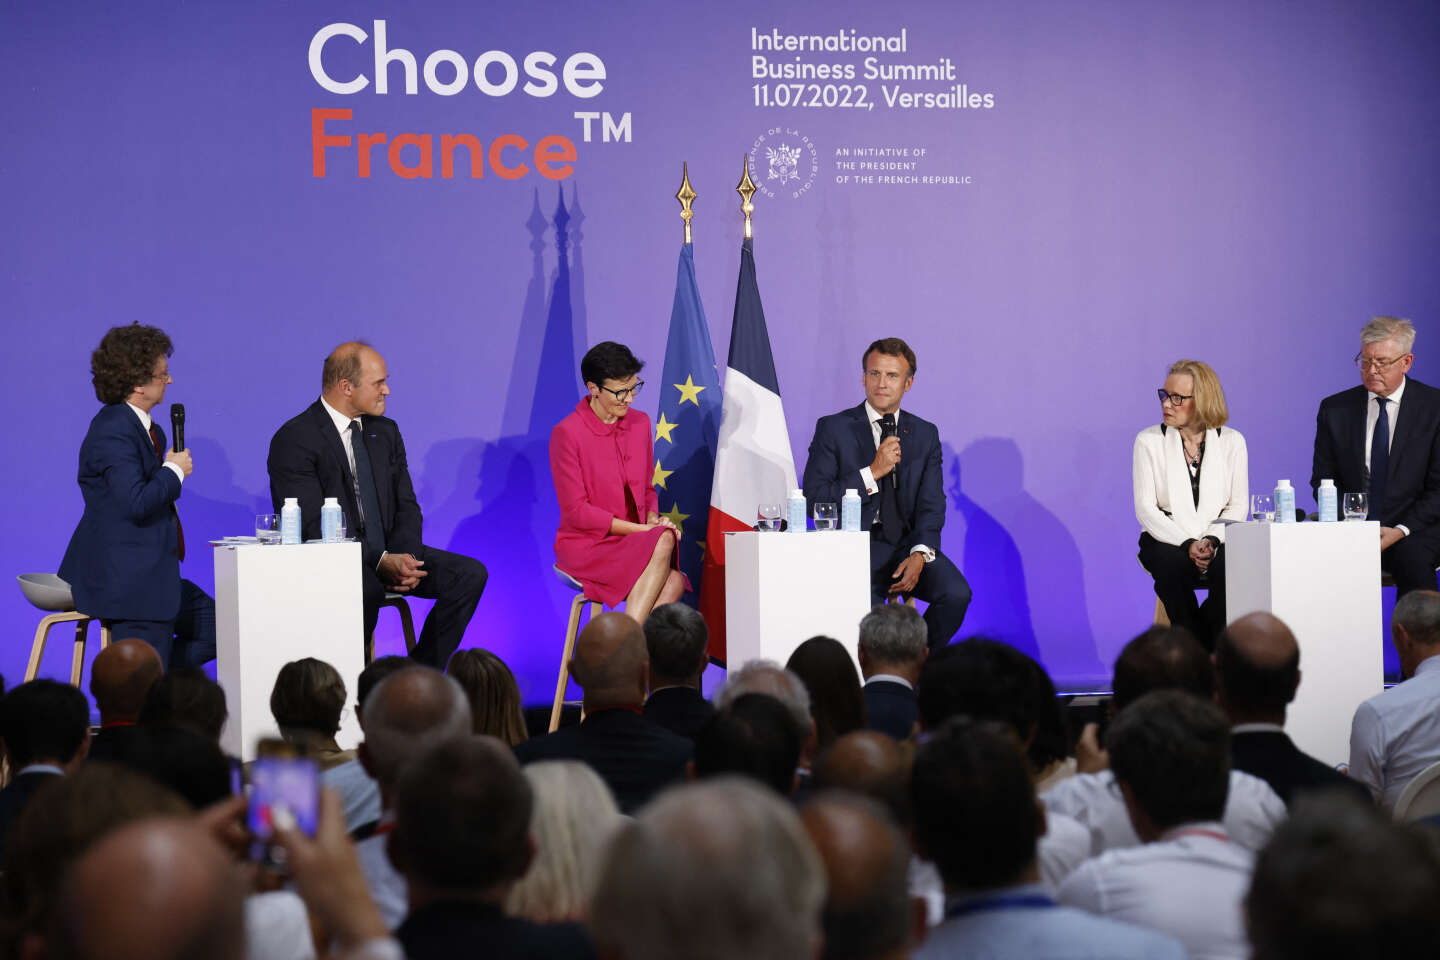 Regarder la vidéo A Versailles, le sommet Choose France enregistre un record d’investissements étrangers